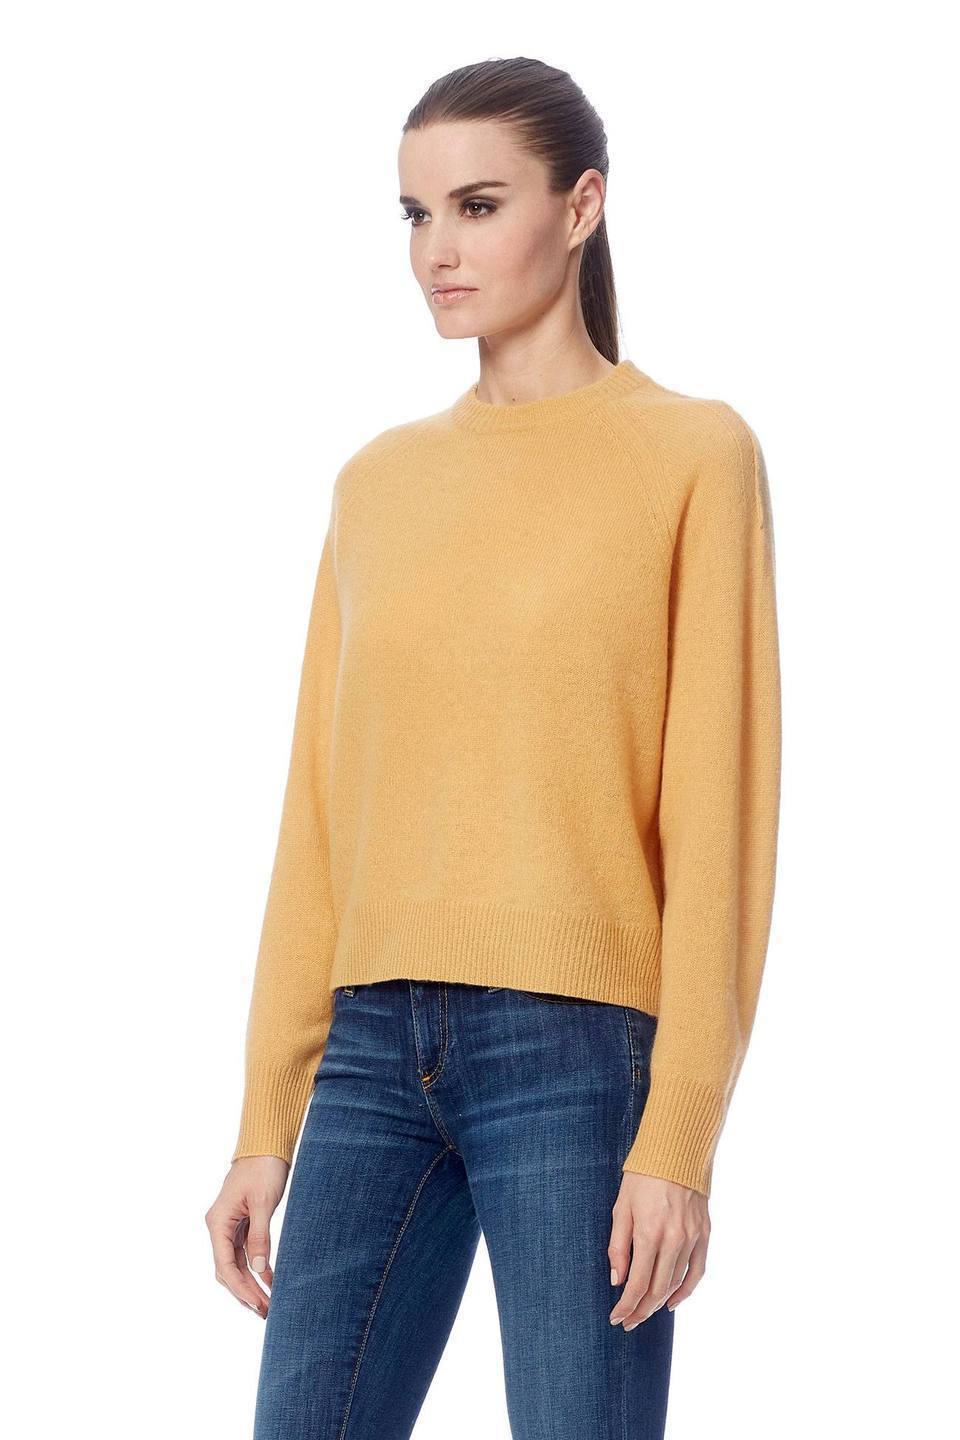 360 Cashmere - Gracie Cashmere Sweater in Pollen